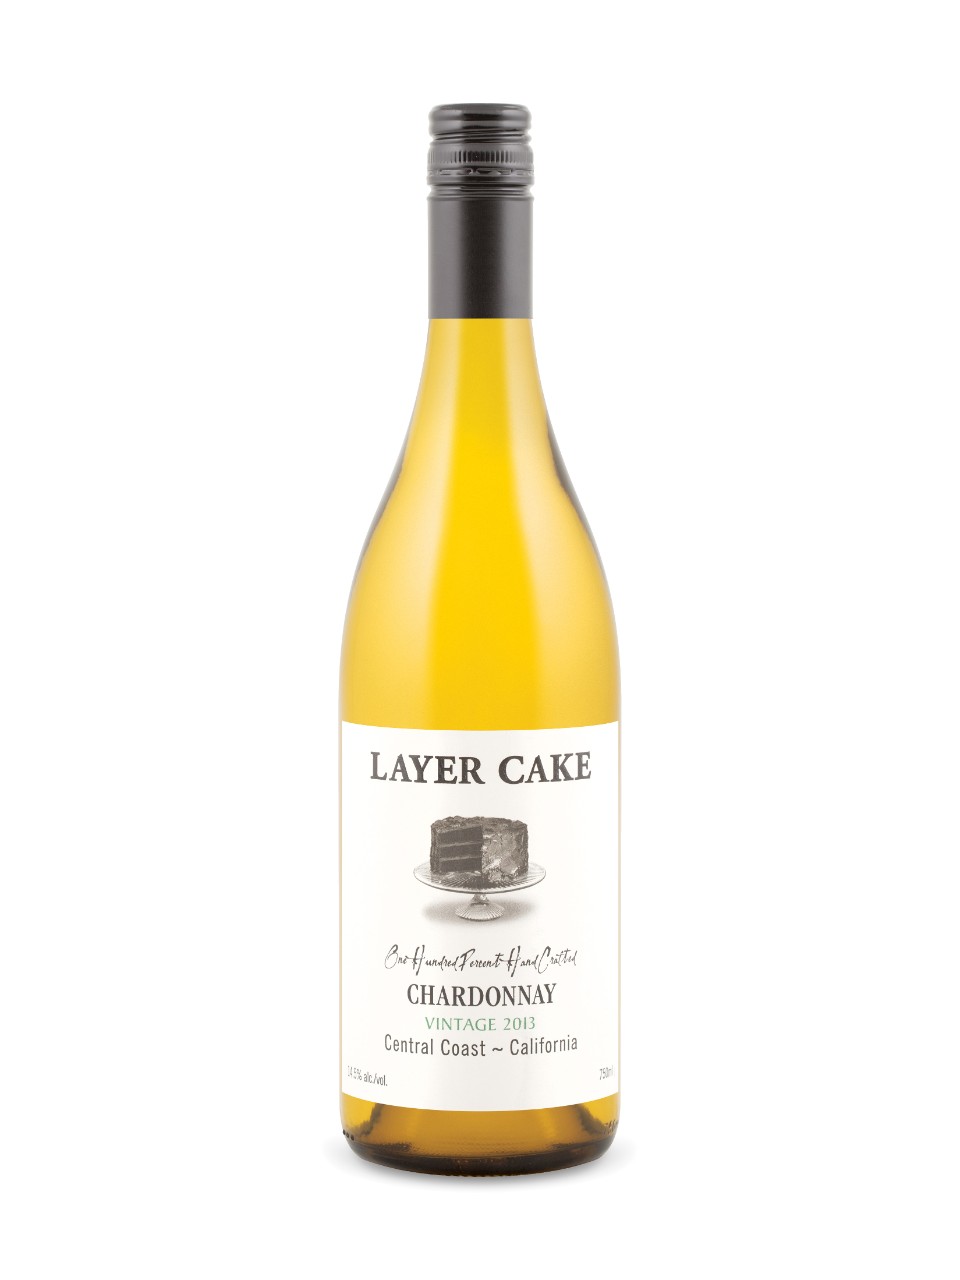 Layer Cake Chardonnay 2014